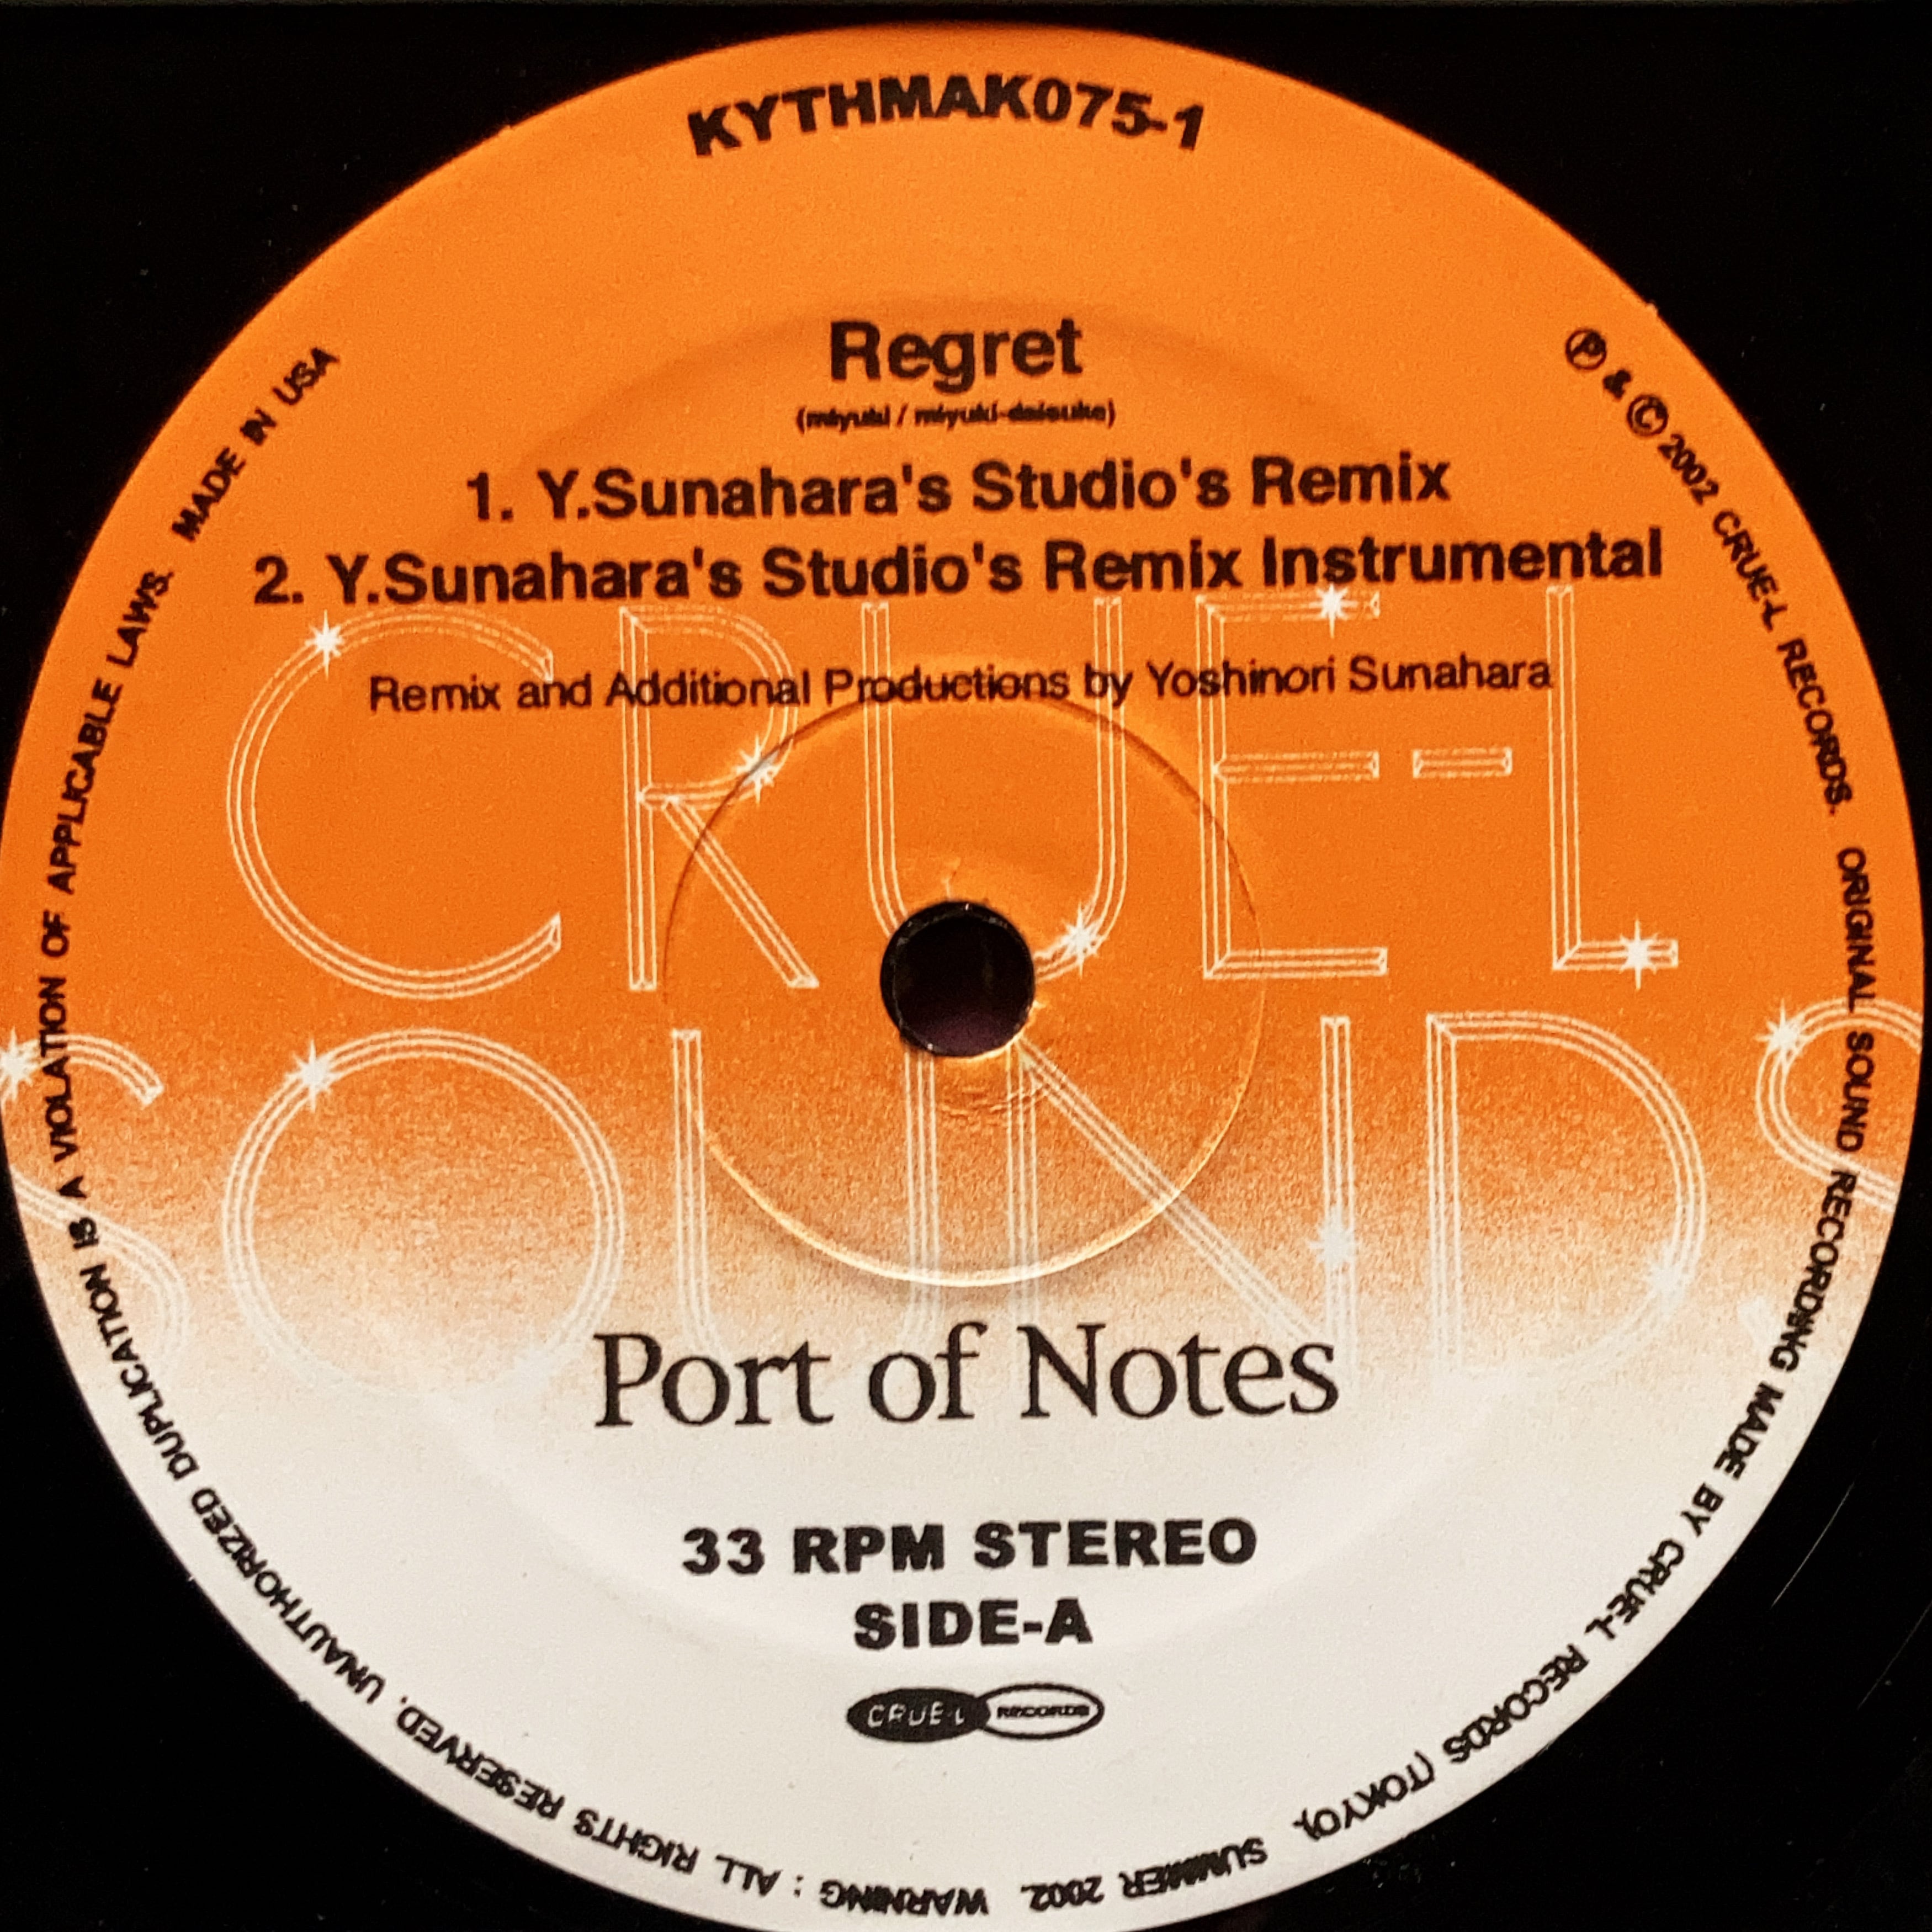 ”/ 砂原良徳Remix Port Of Notes / Regret Crue L Records